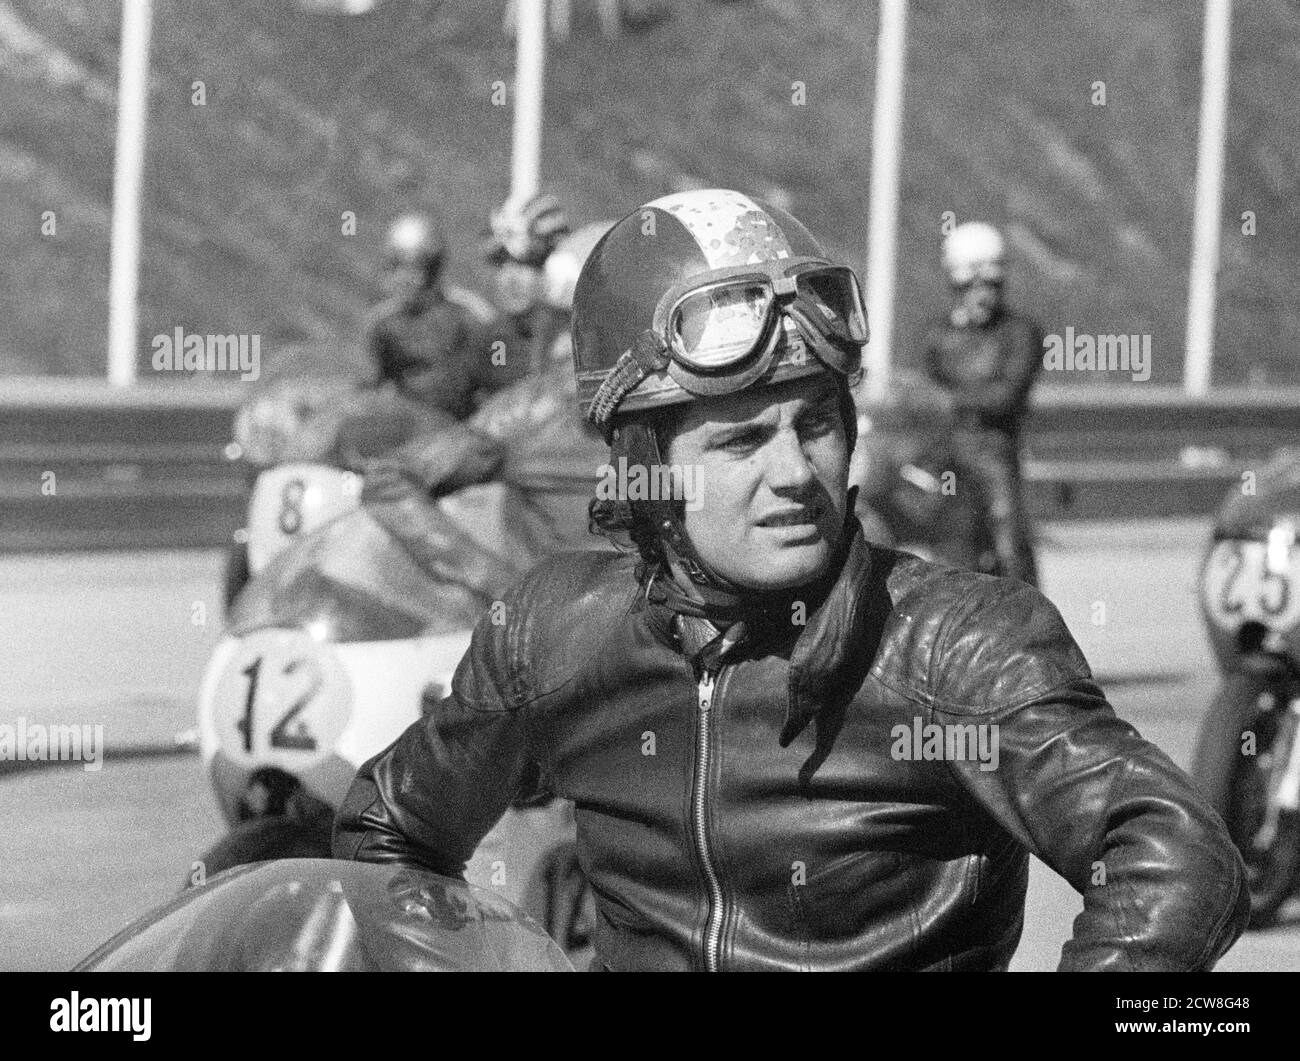 Giacomo Agostini am Start, Porträt, Salzburgring, Motorradrennen 1971 Foto de stock